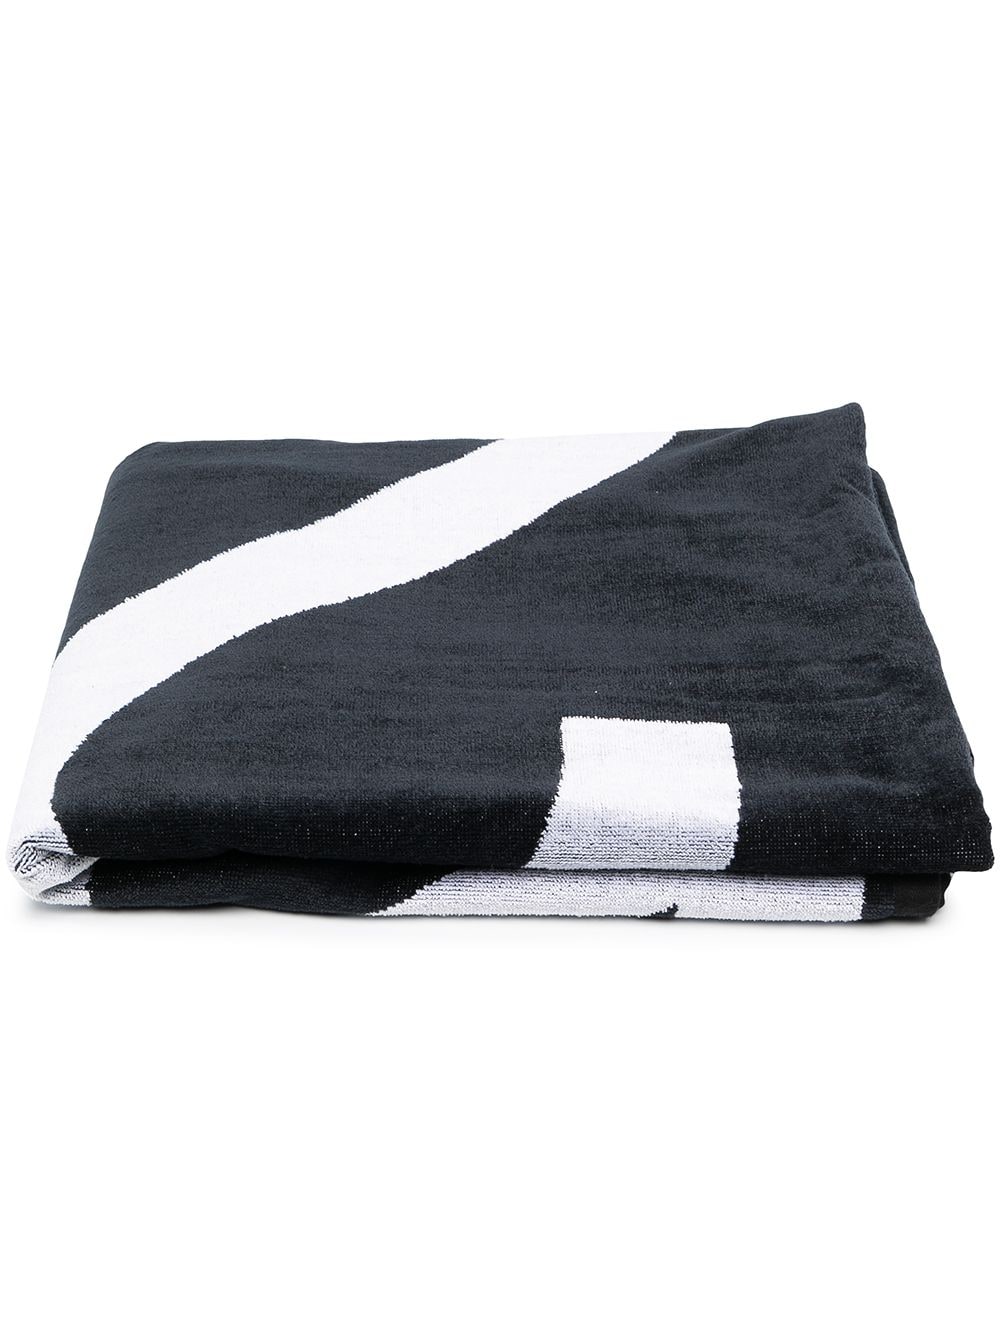 Black and white children's towel